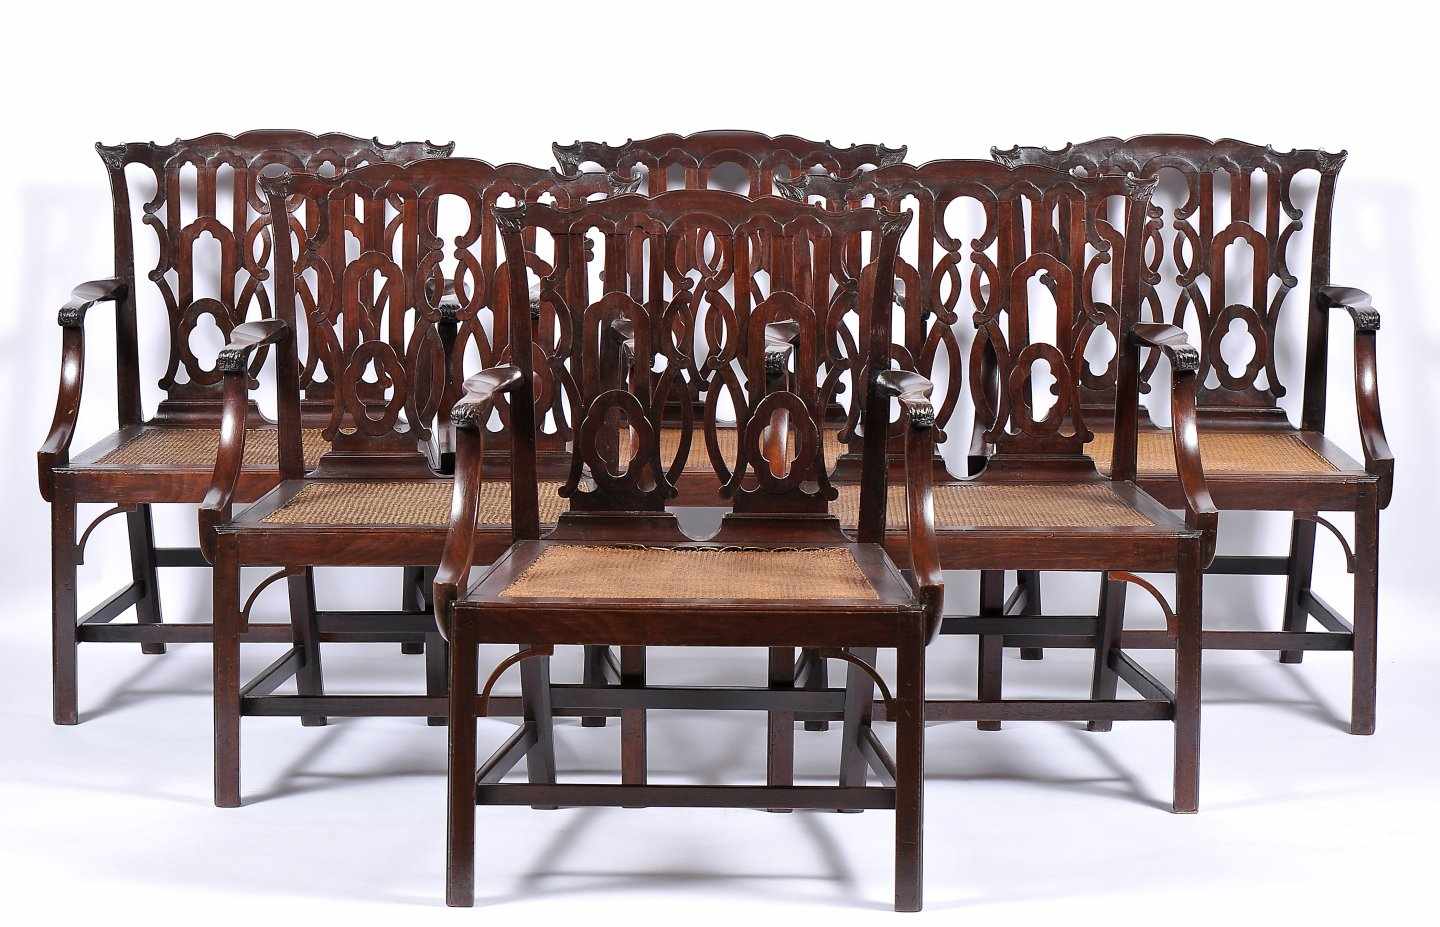 A Set of Six ArmchairsA Set of Six Armchairs, Chippendale style, carved mahogany, pierced back